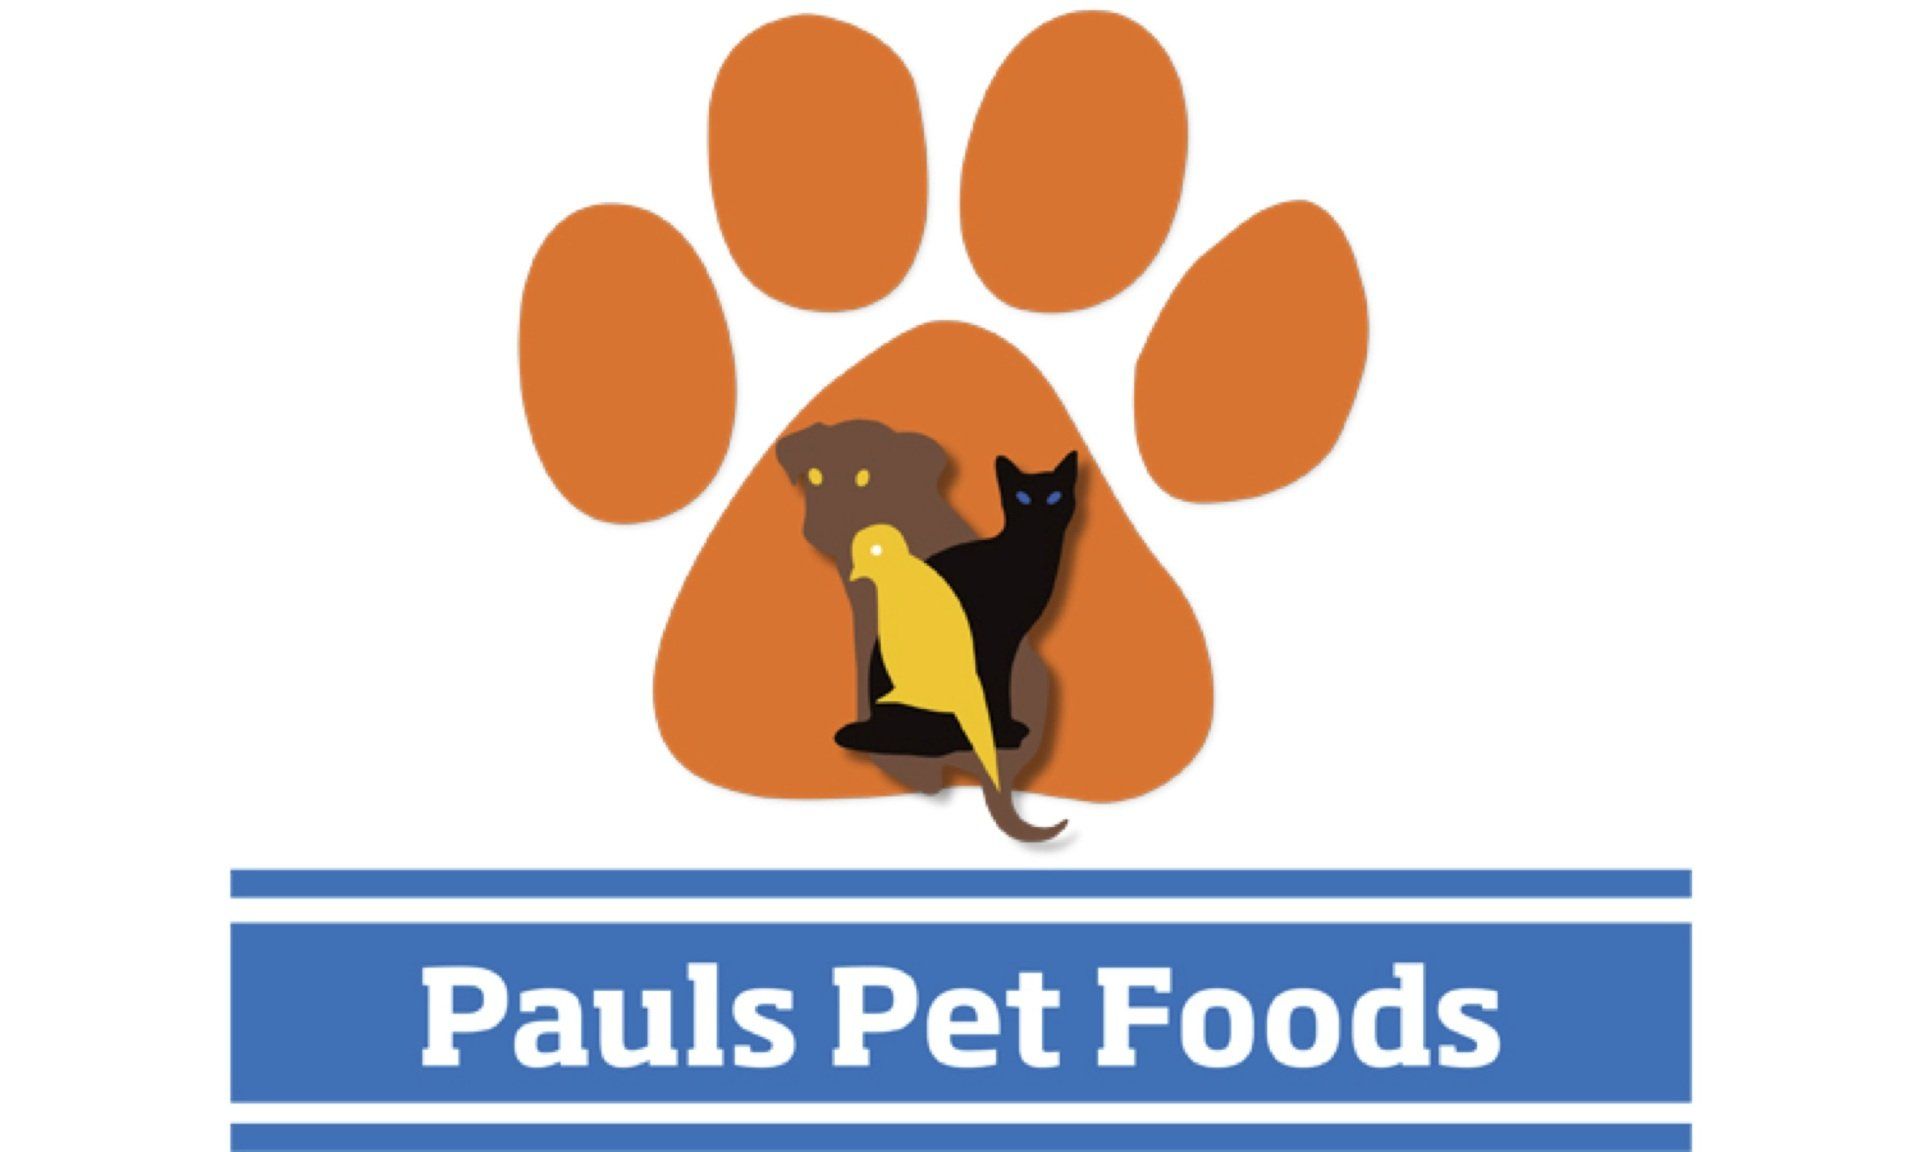 Paul's Pet Foods